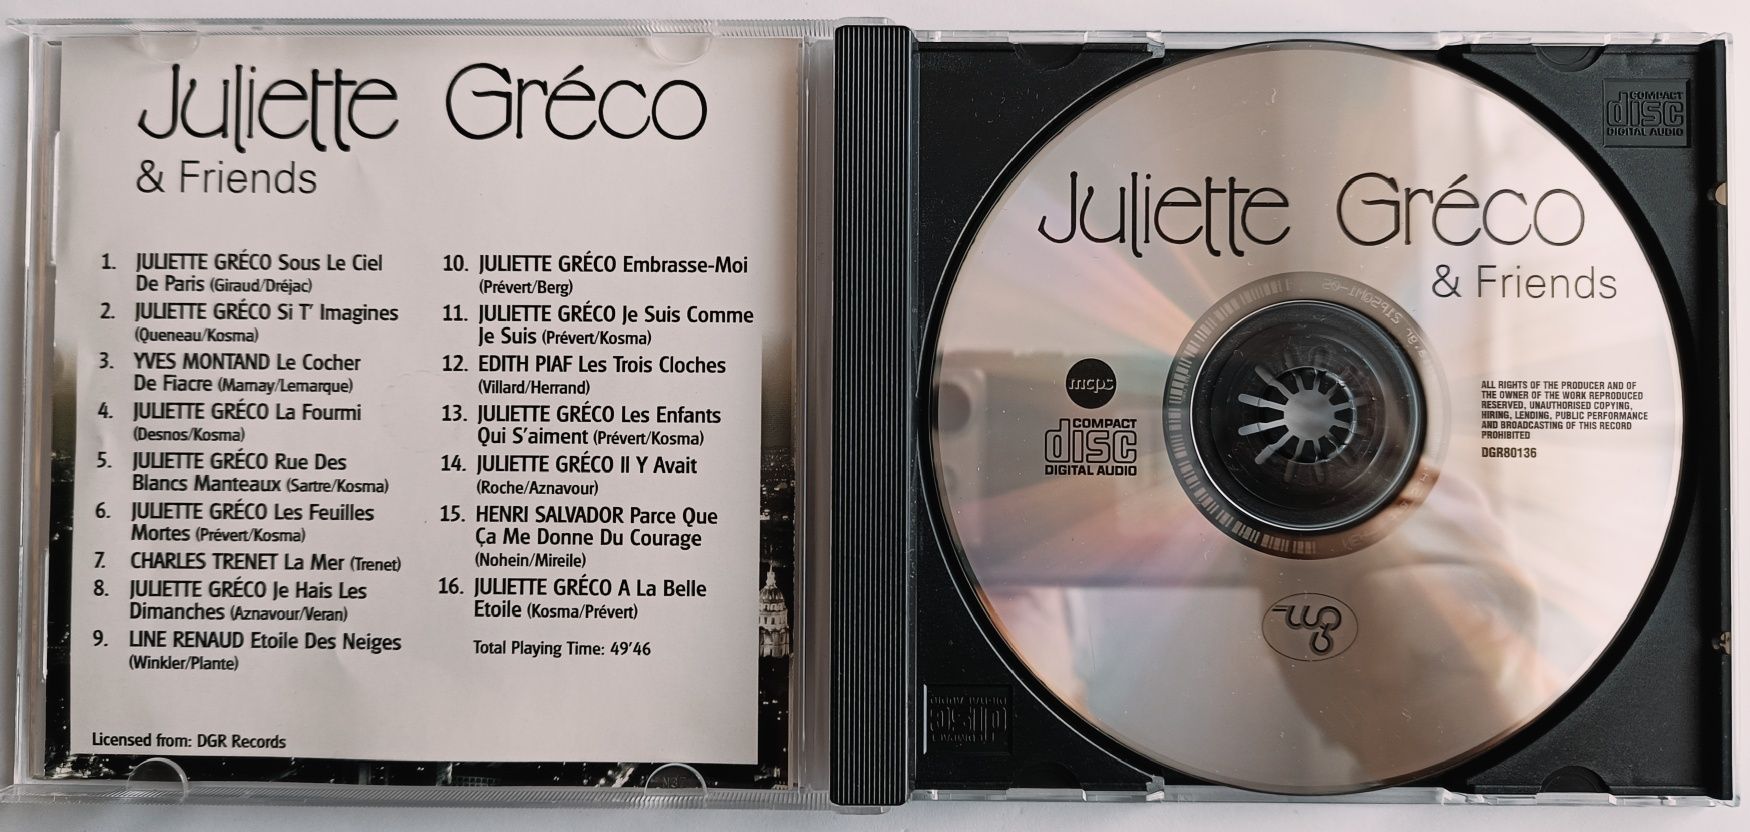 Juliette Greco & Friends 2005r